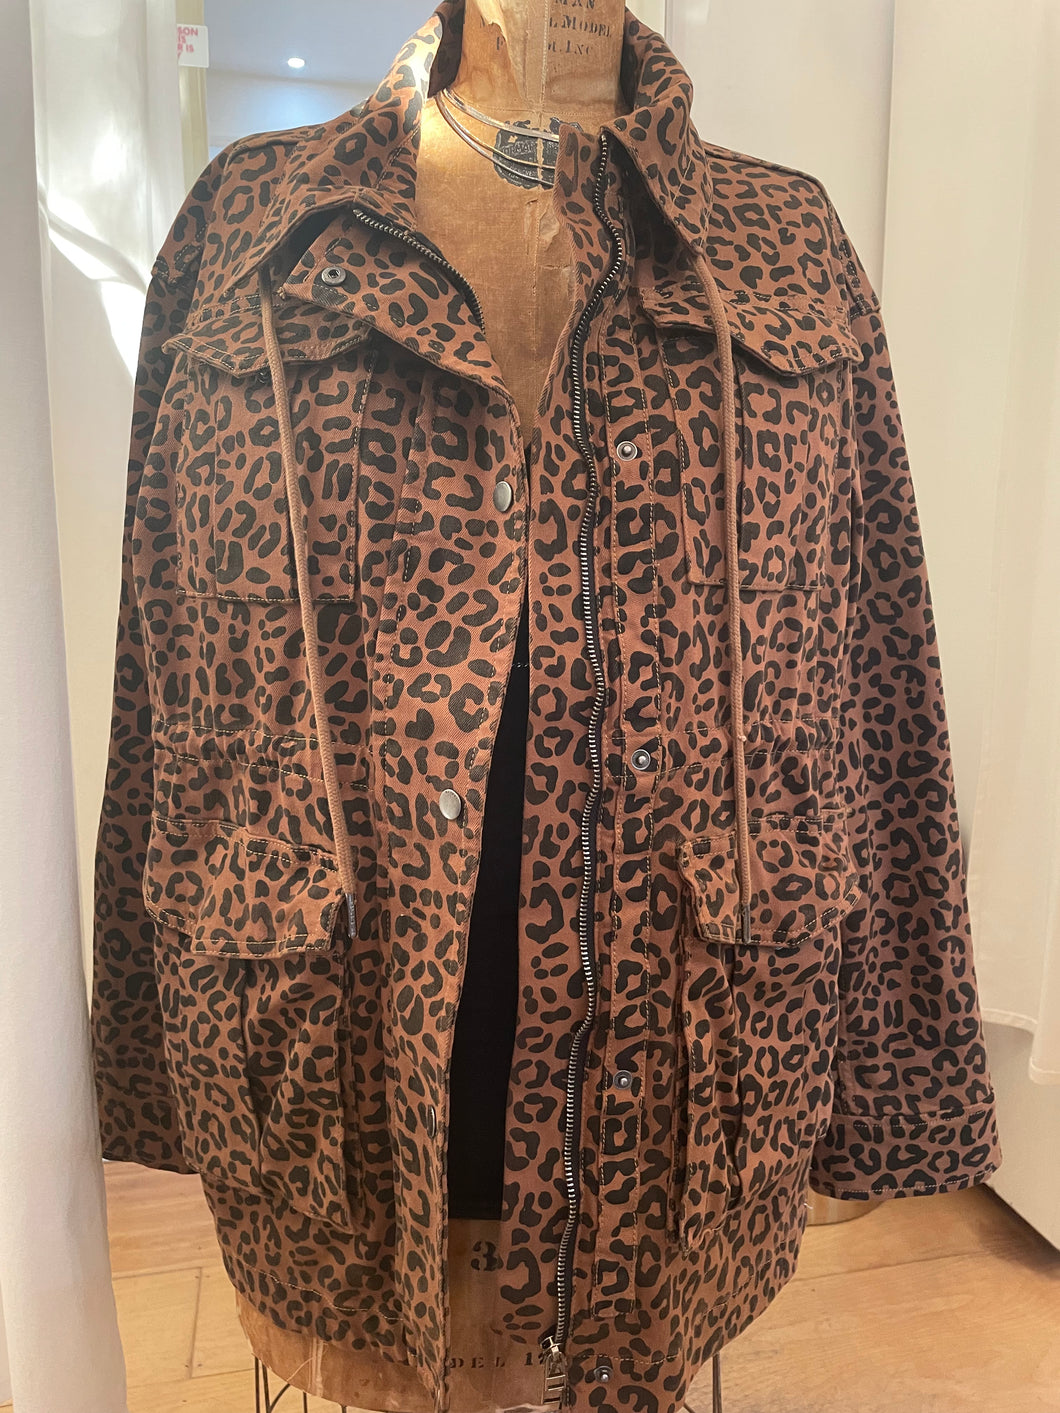 DL 1961 cheetah print jacket